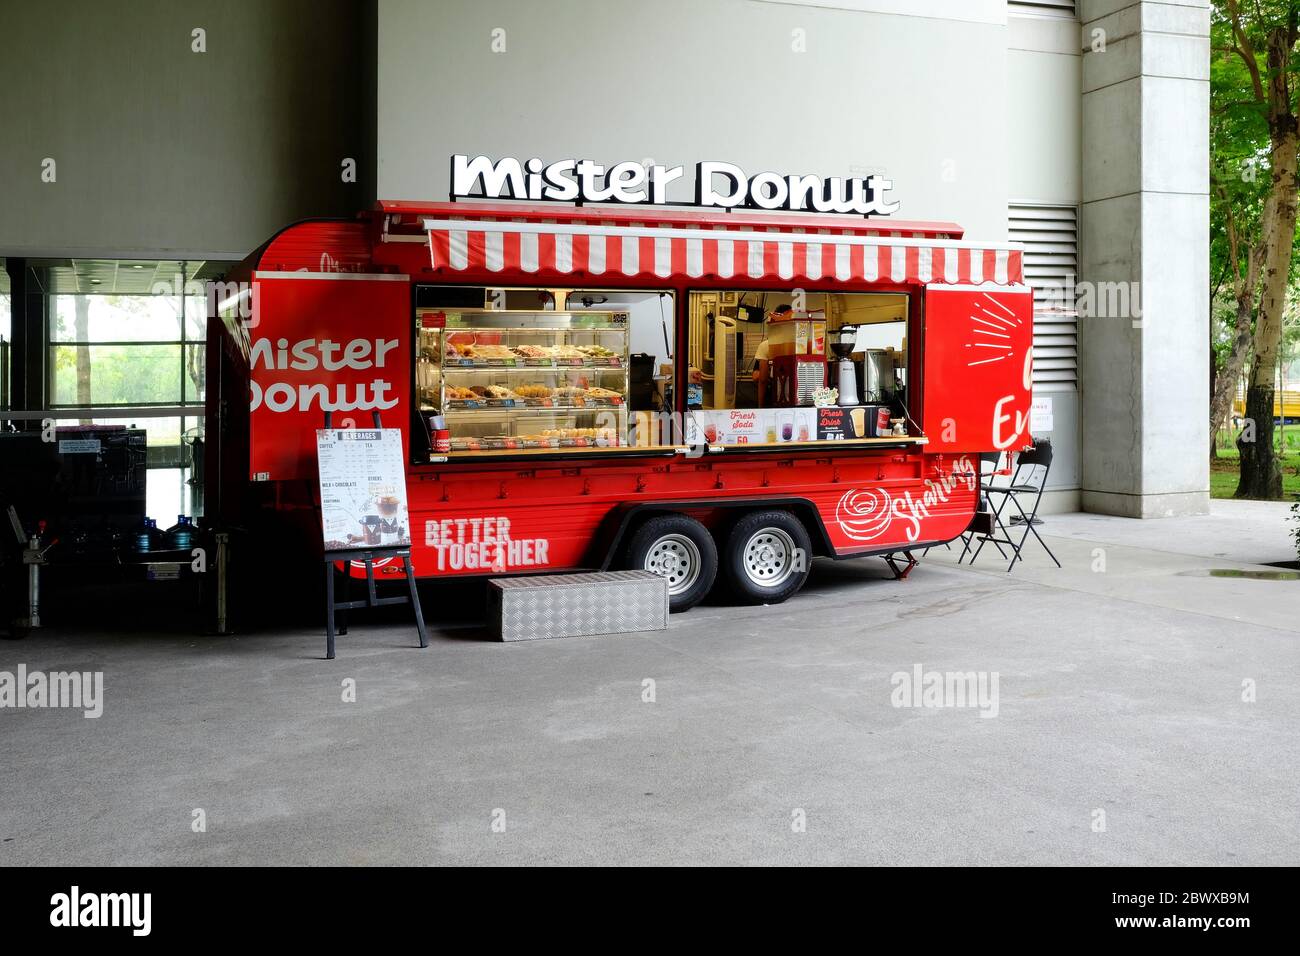 BANGKOK, THAILAND - FEBRUARY 11, 2020: Mister donut food truck in Bangkok University. Mister donut is famous donut franchise in Thailand. It is founde Stock Photo